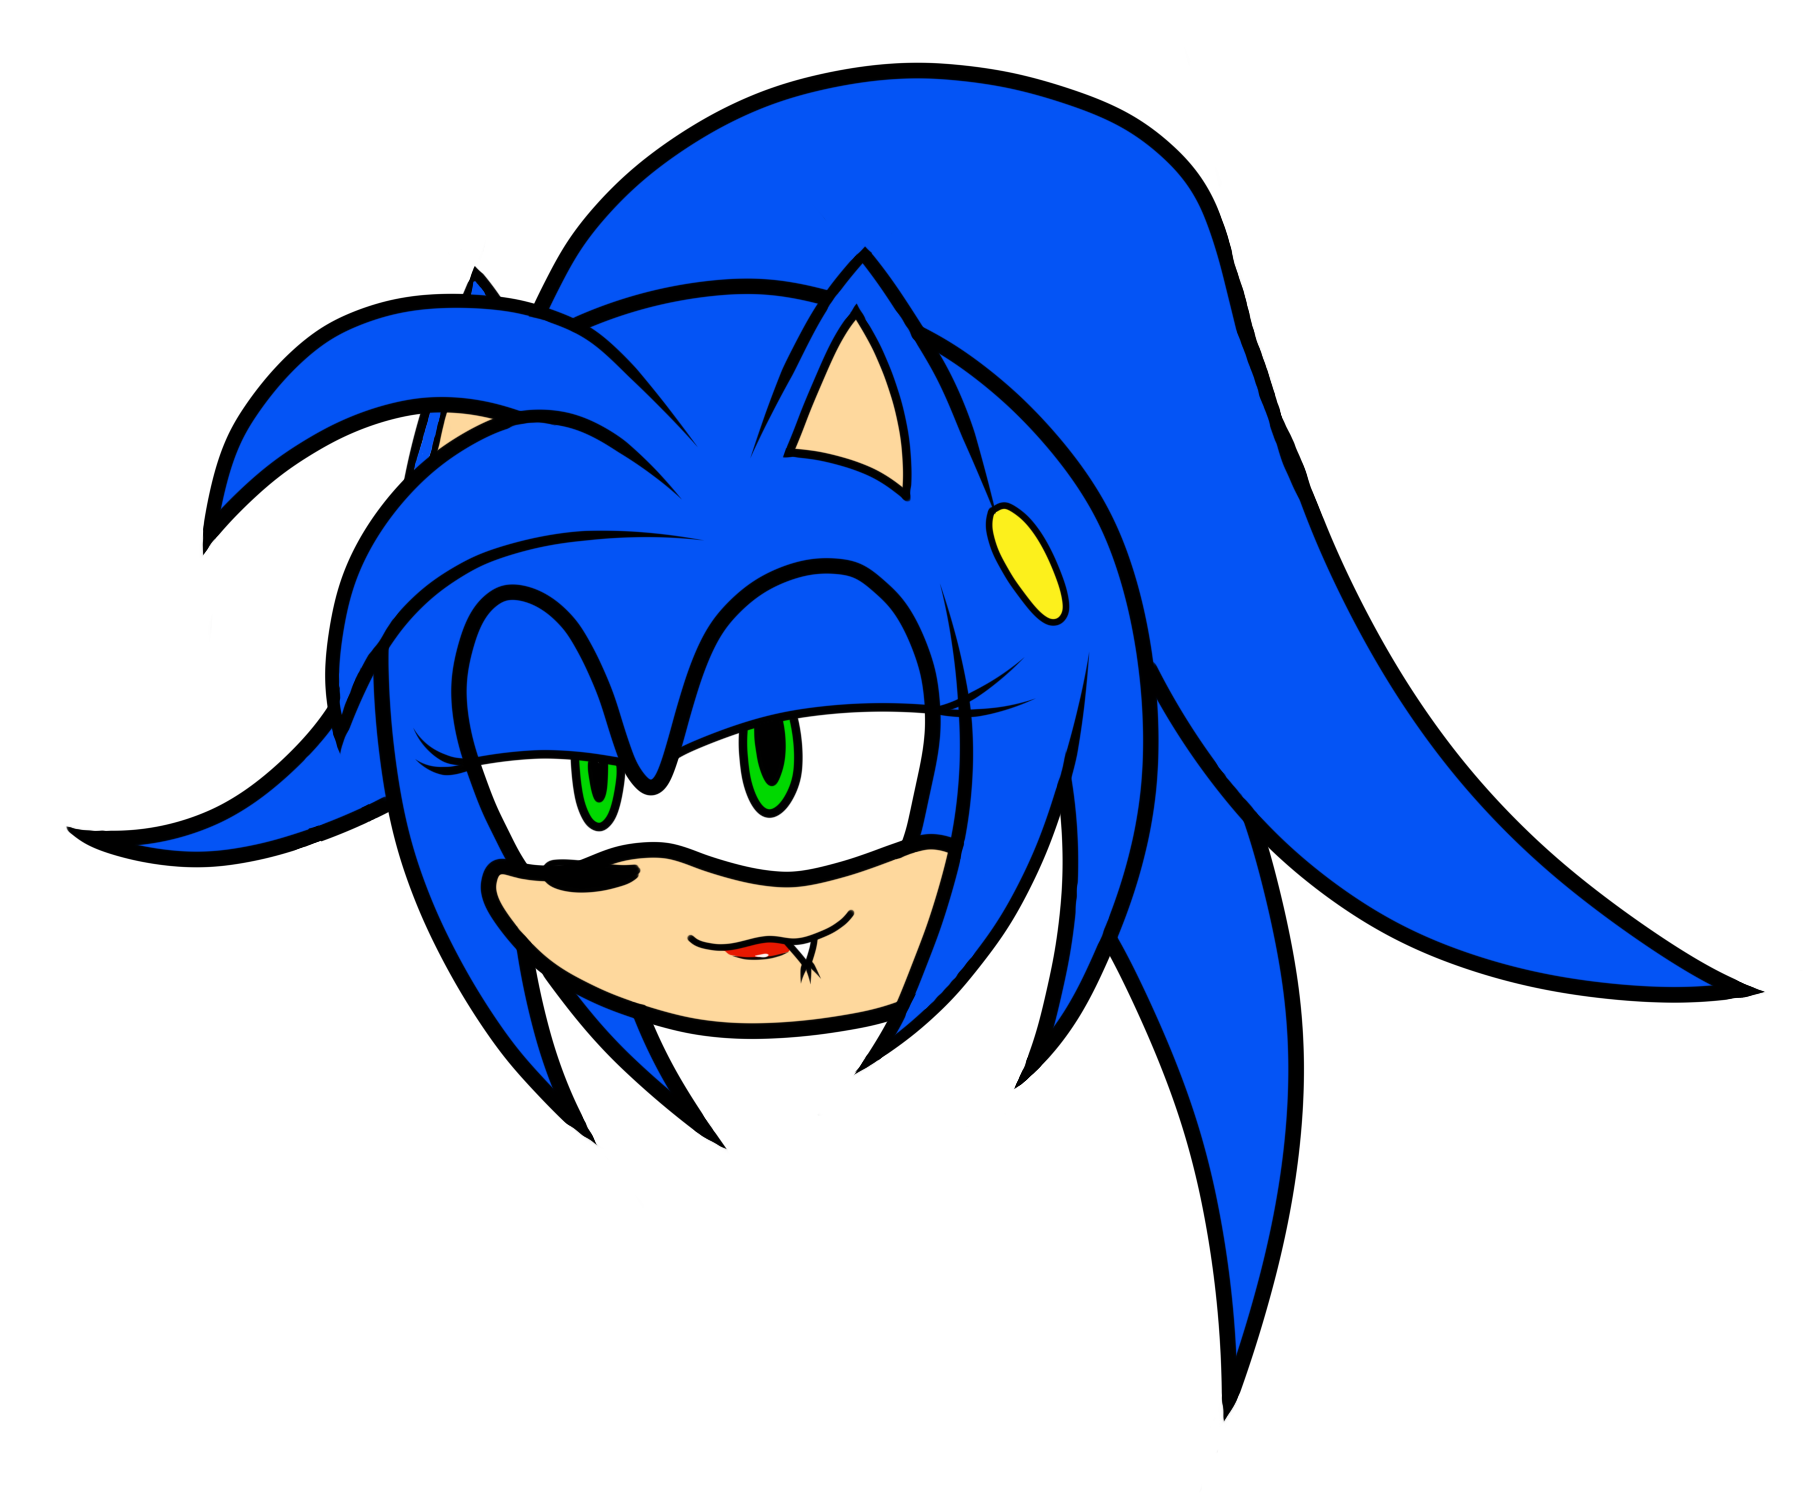 Sonic transformed 3 ctrl z